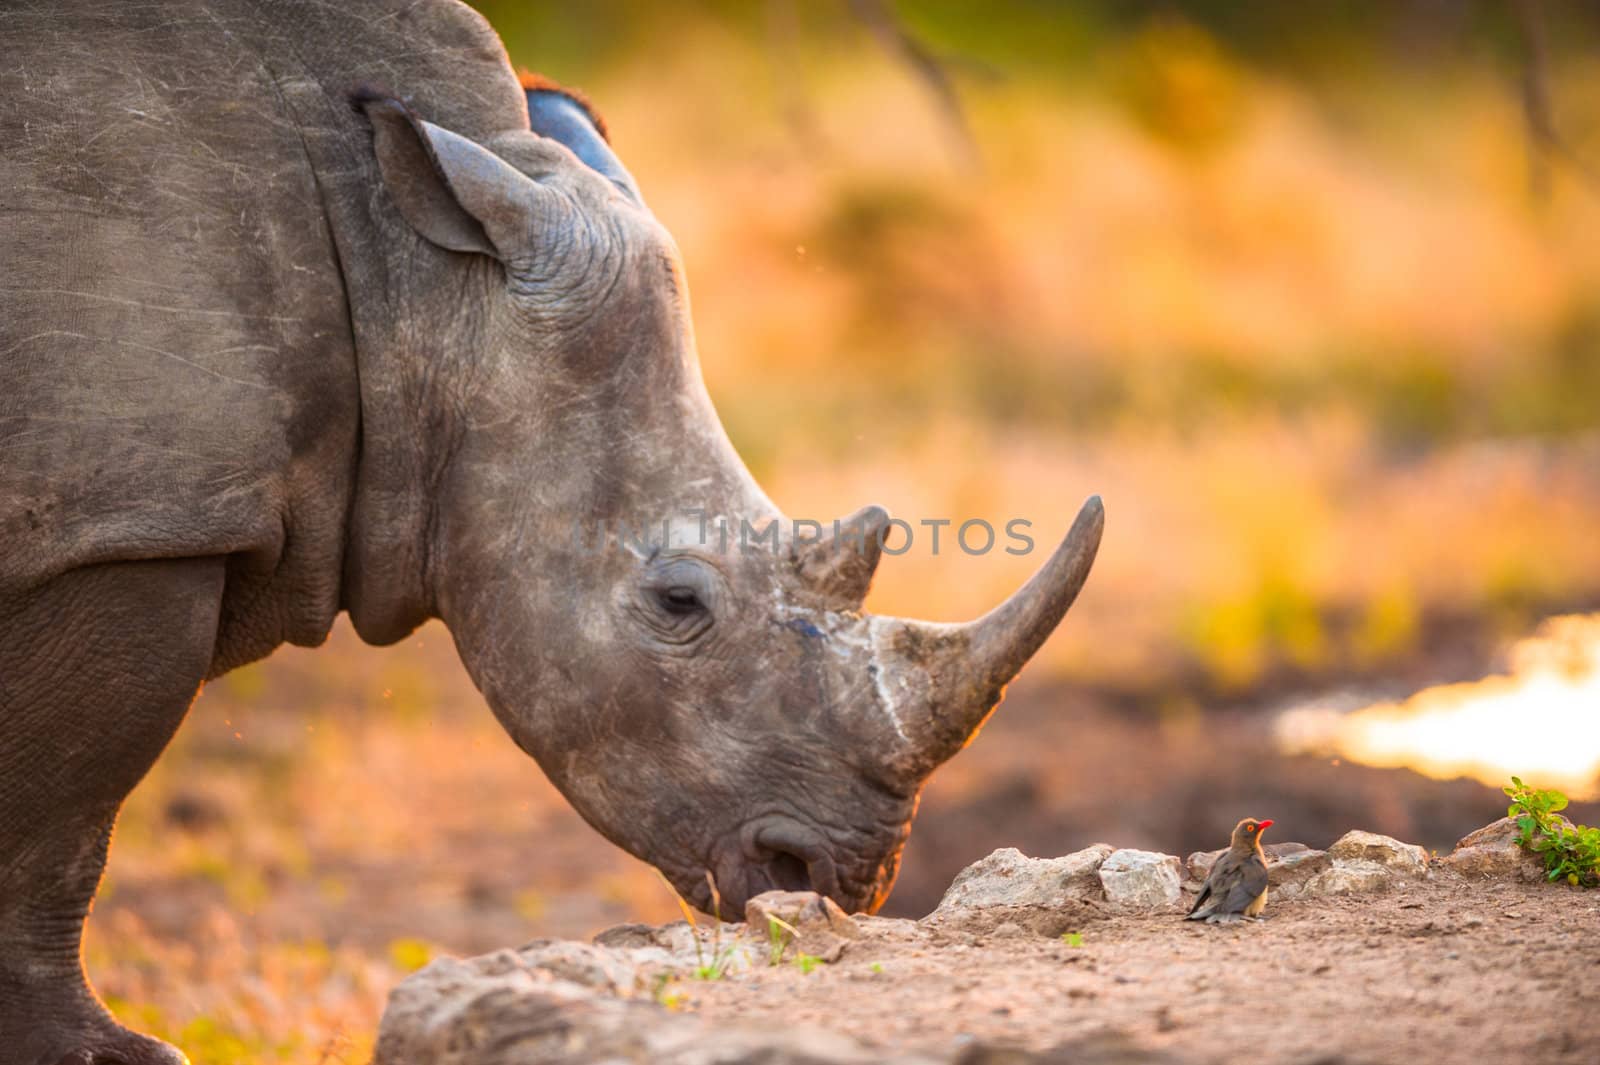 Rhinoceros and tiny bird near Kruger National Park